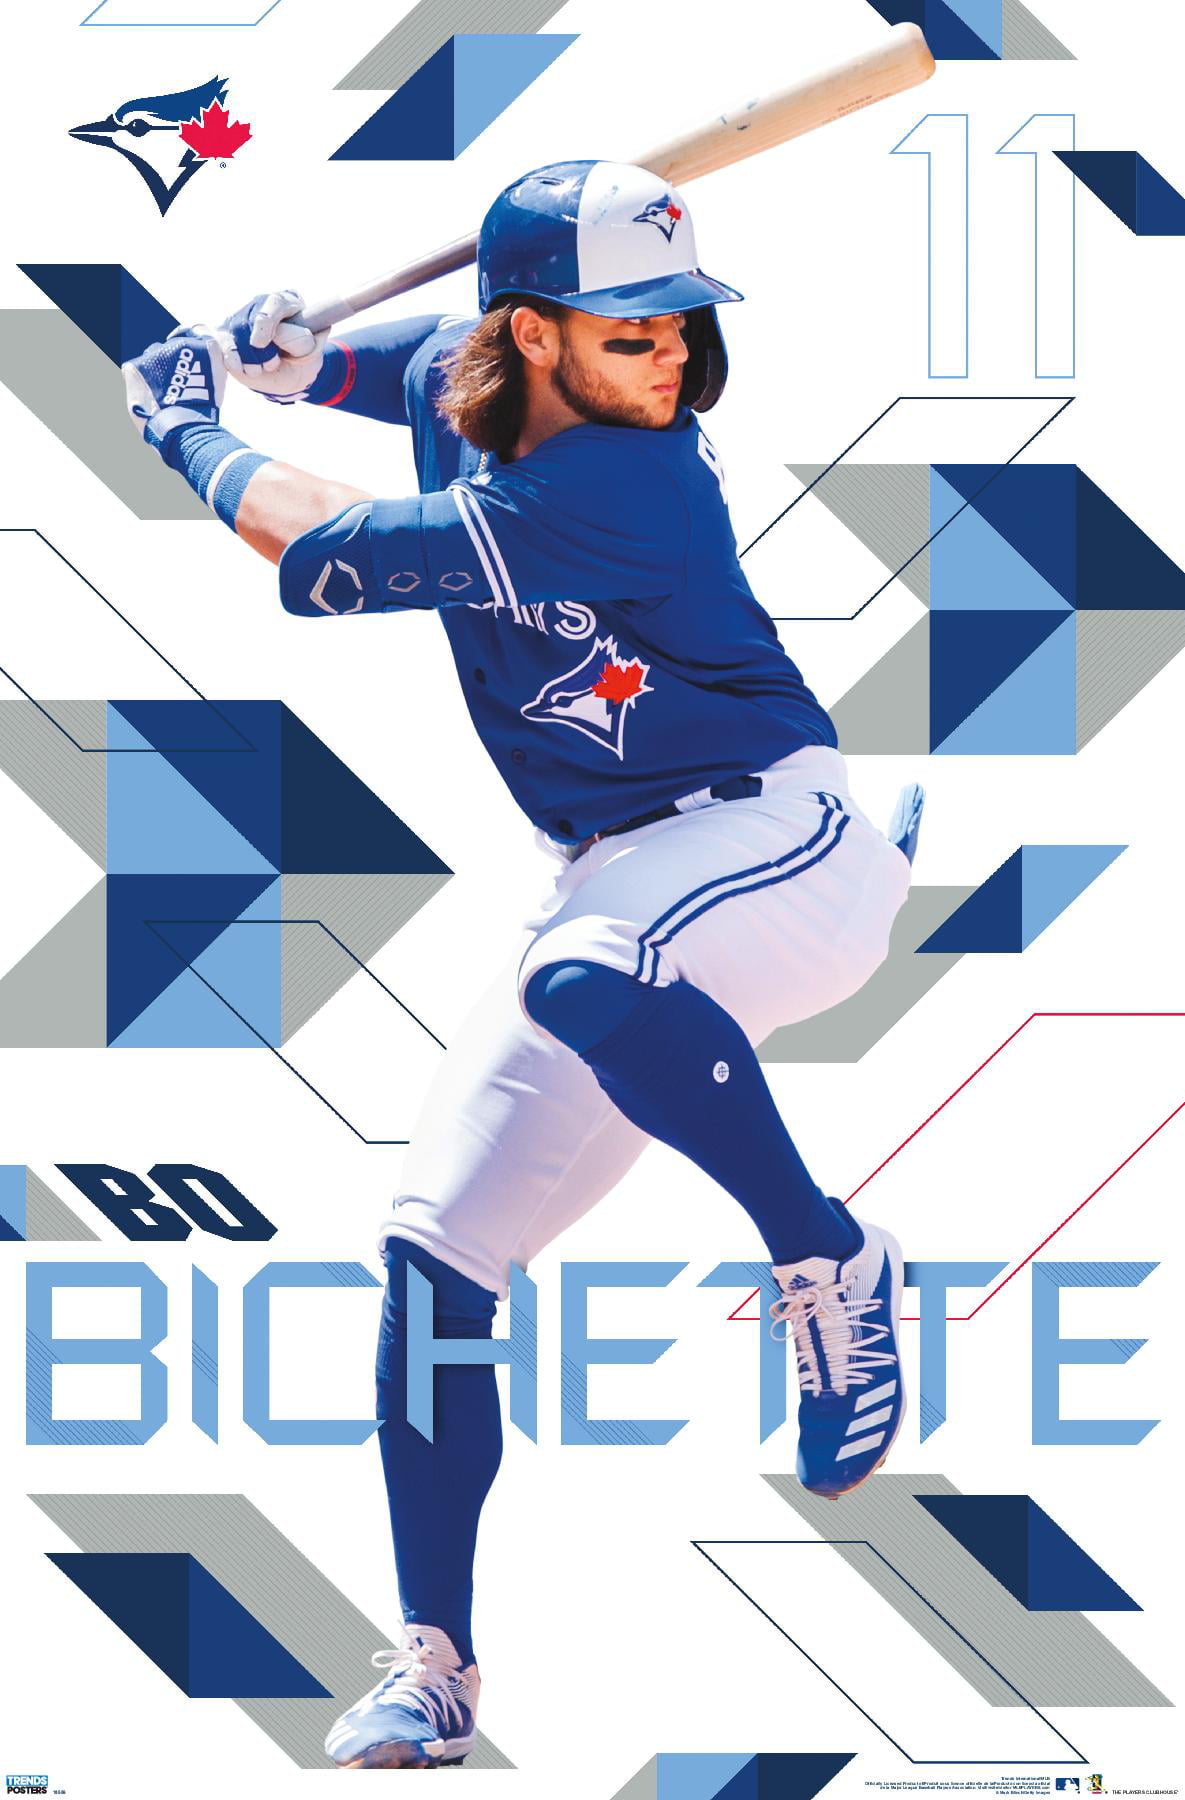 MLB Toronto Blue Jays - Bo Bichette Wall Poster, 14.725 x 22.375